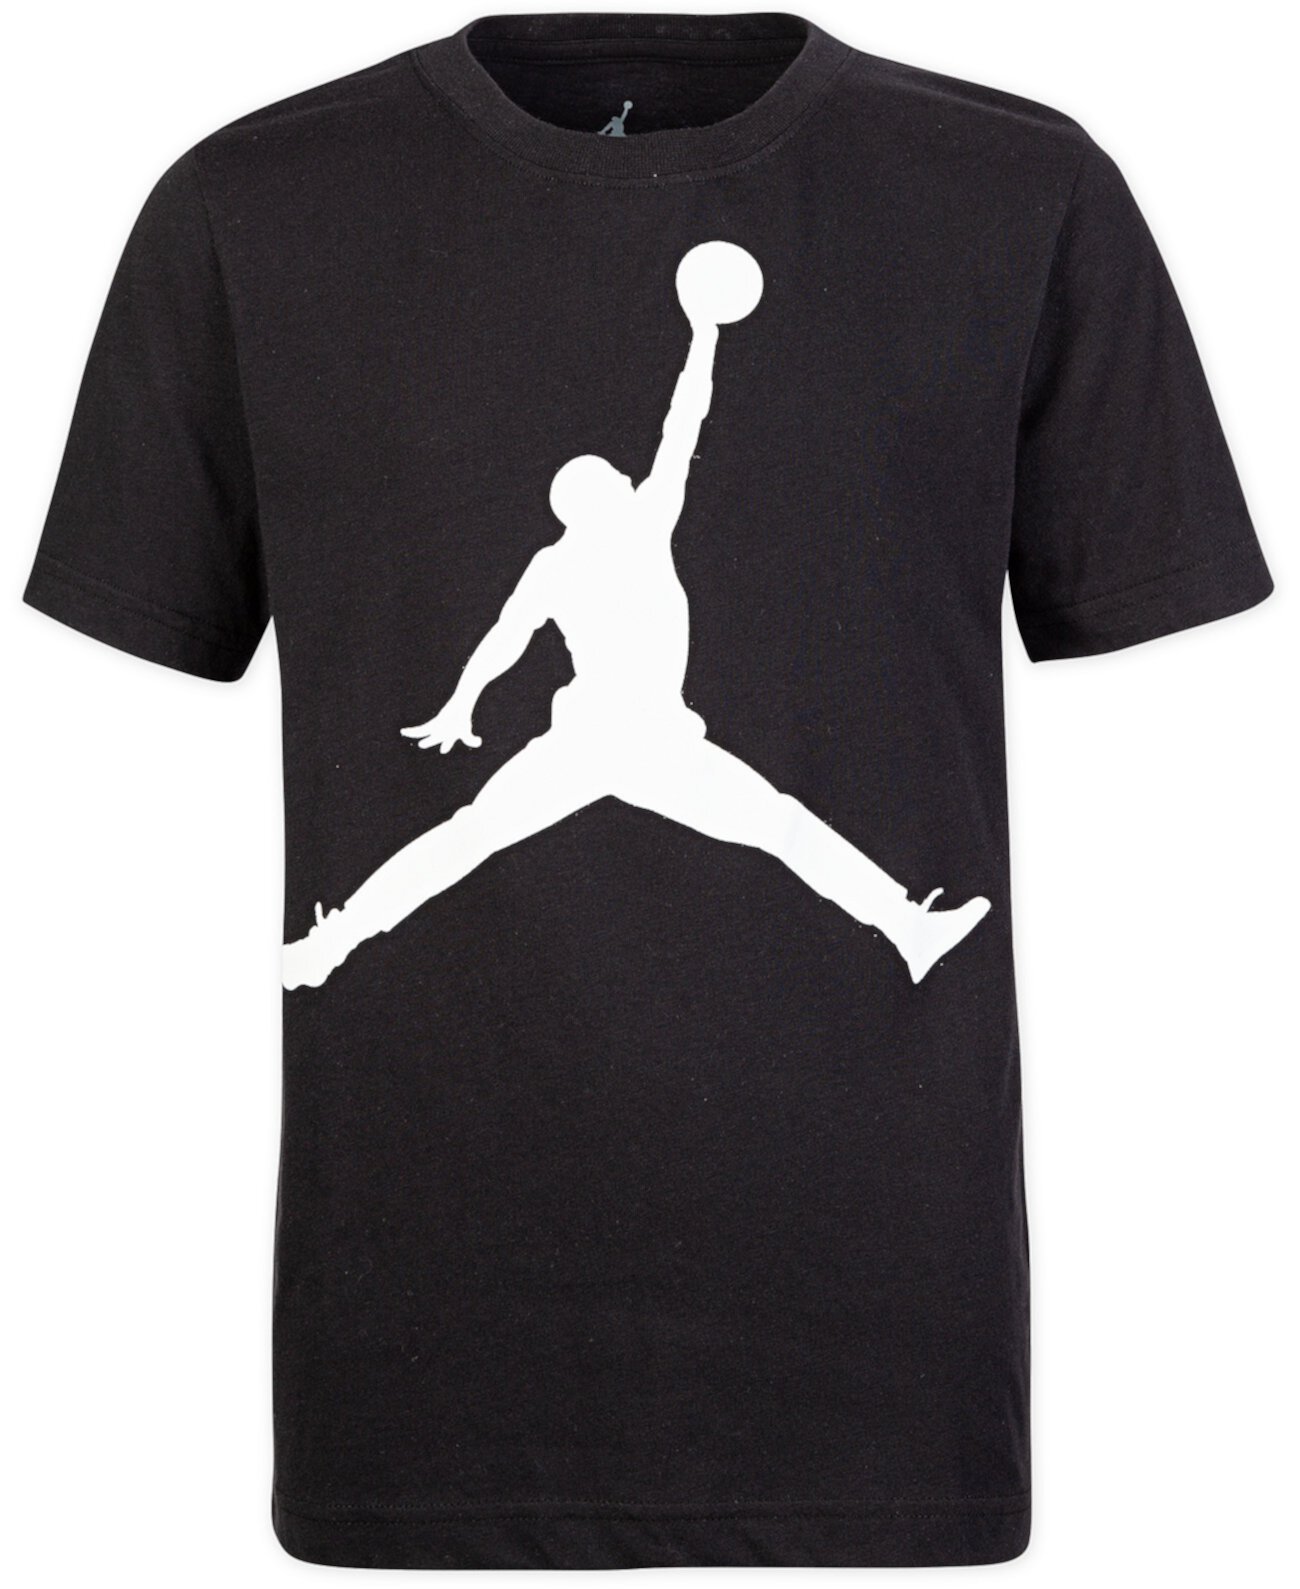 Футболка для мальчиков с логотипом Jumpman Jordan Jordan